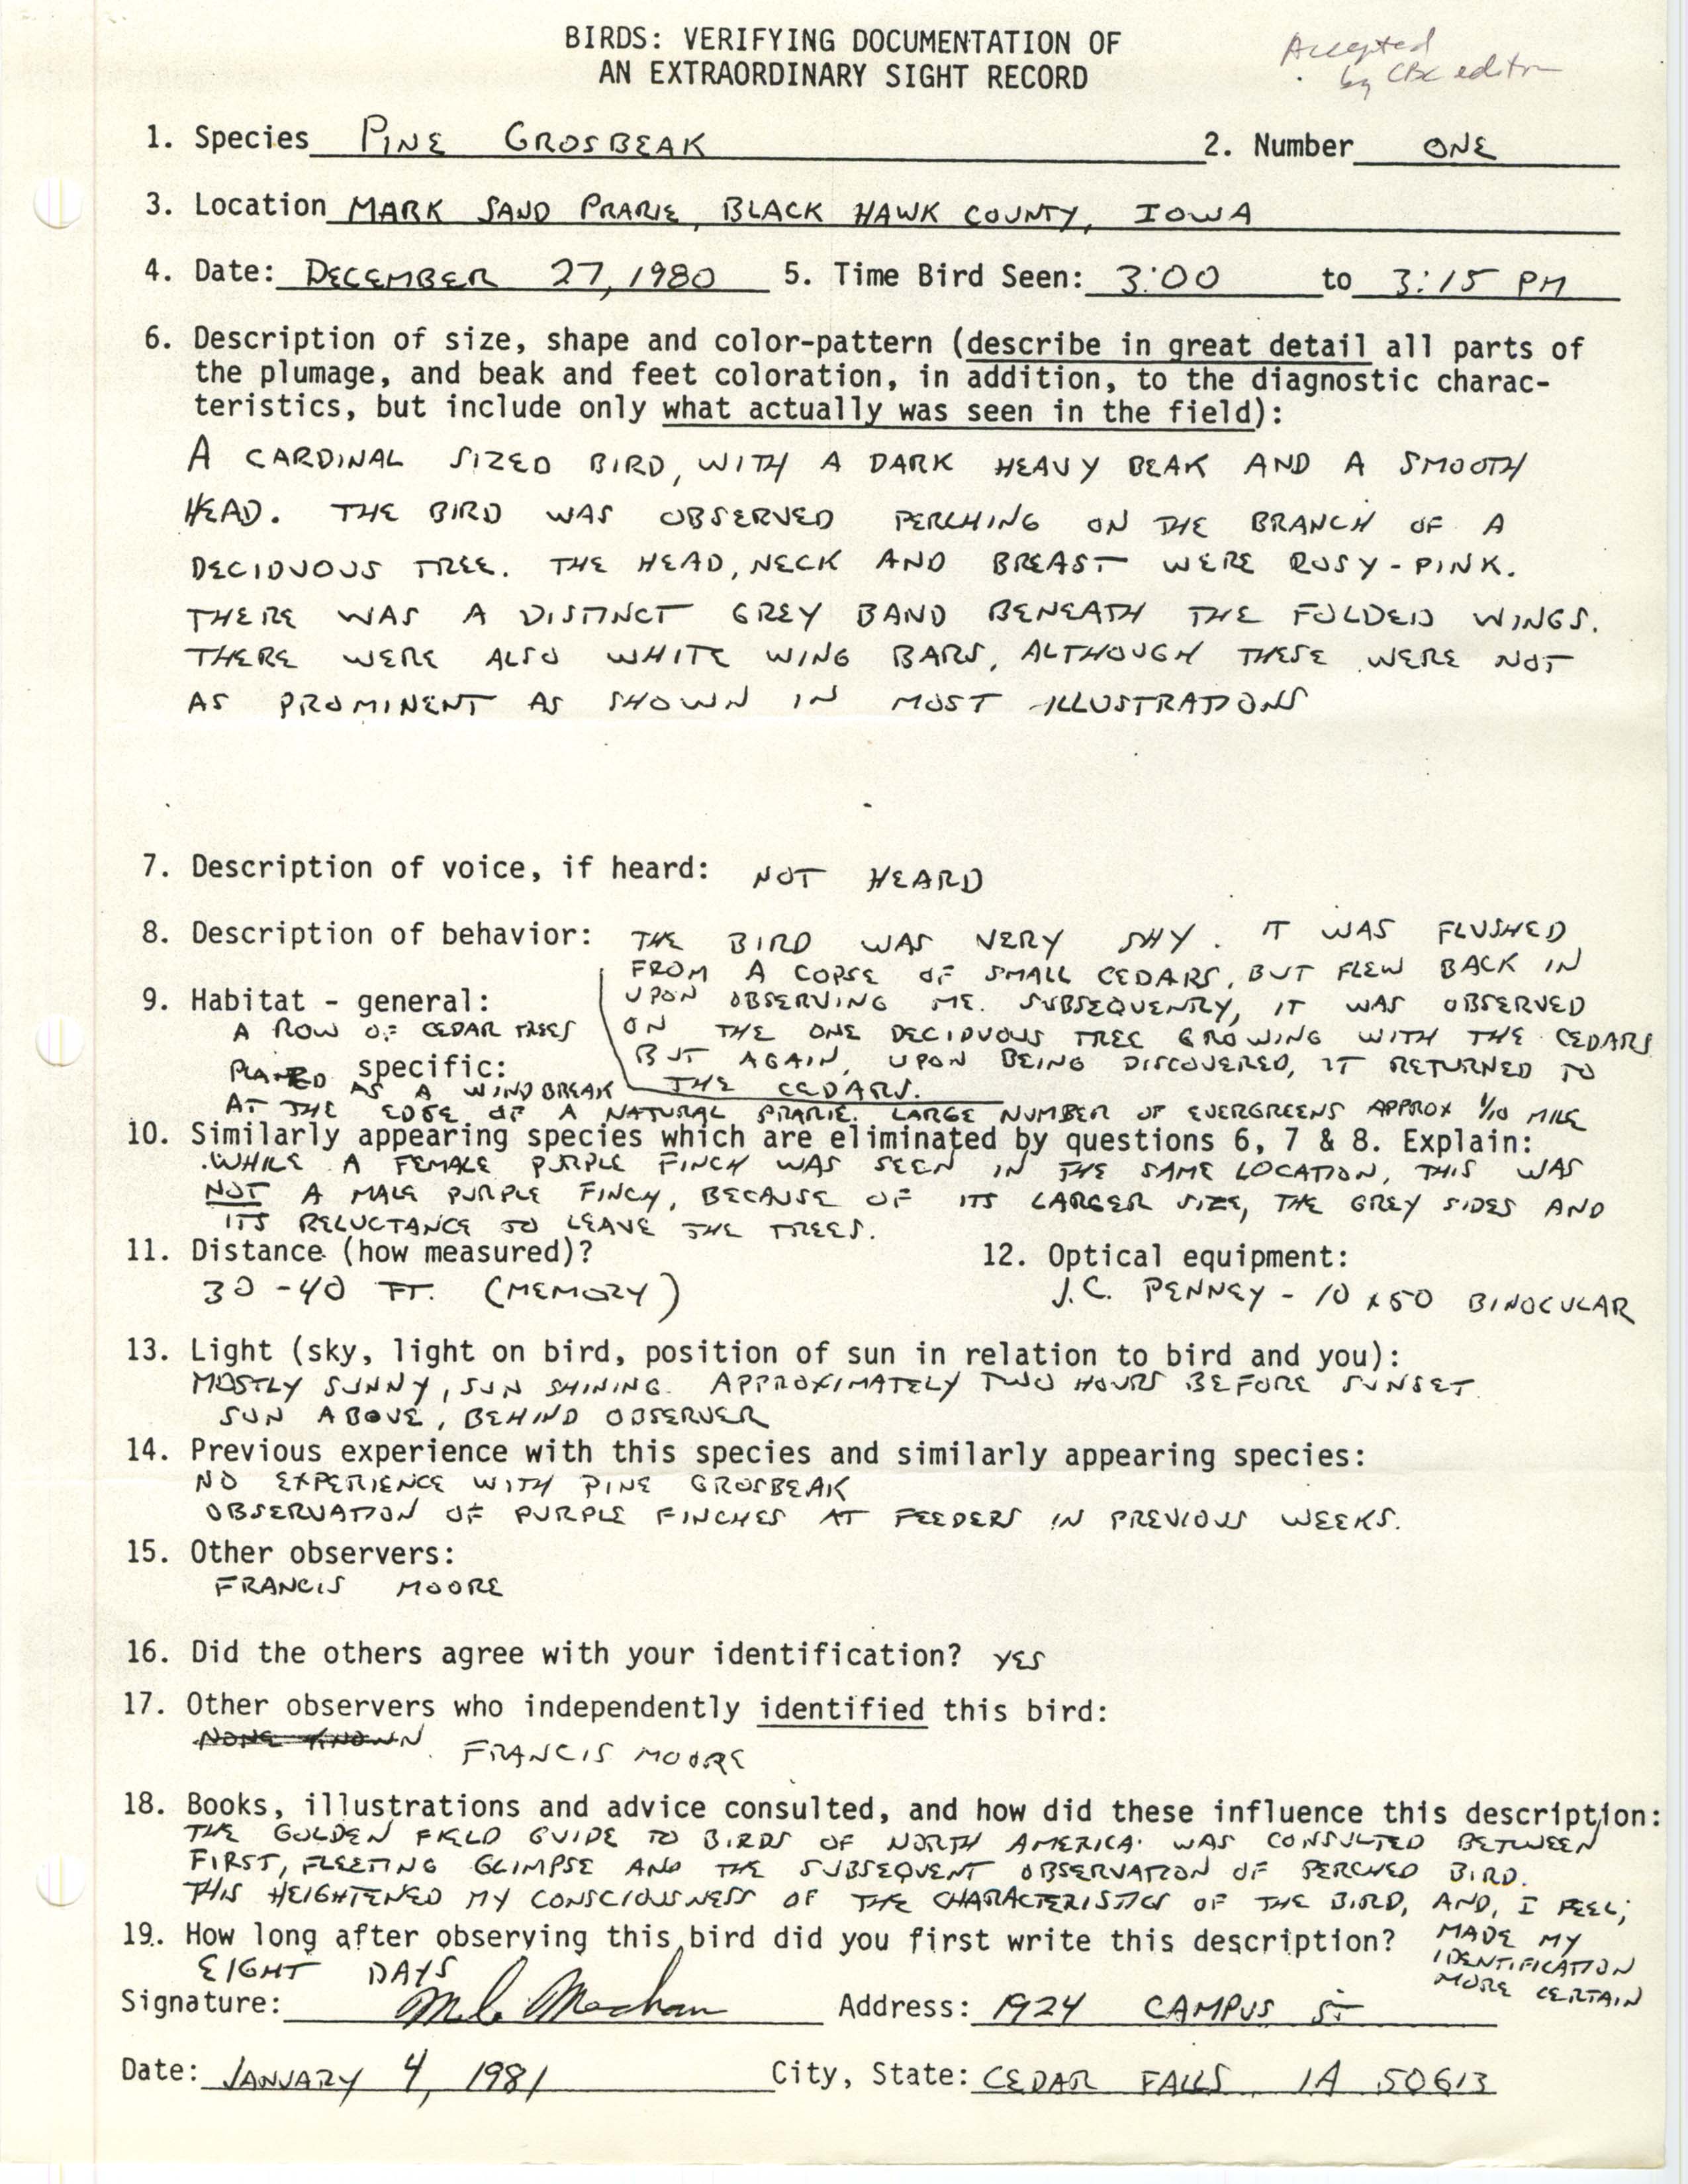 Rare bird documentation form for Pine Grosbeak at Mark Sand Prairie, 1980